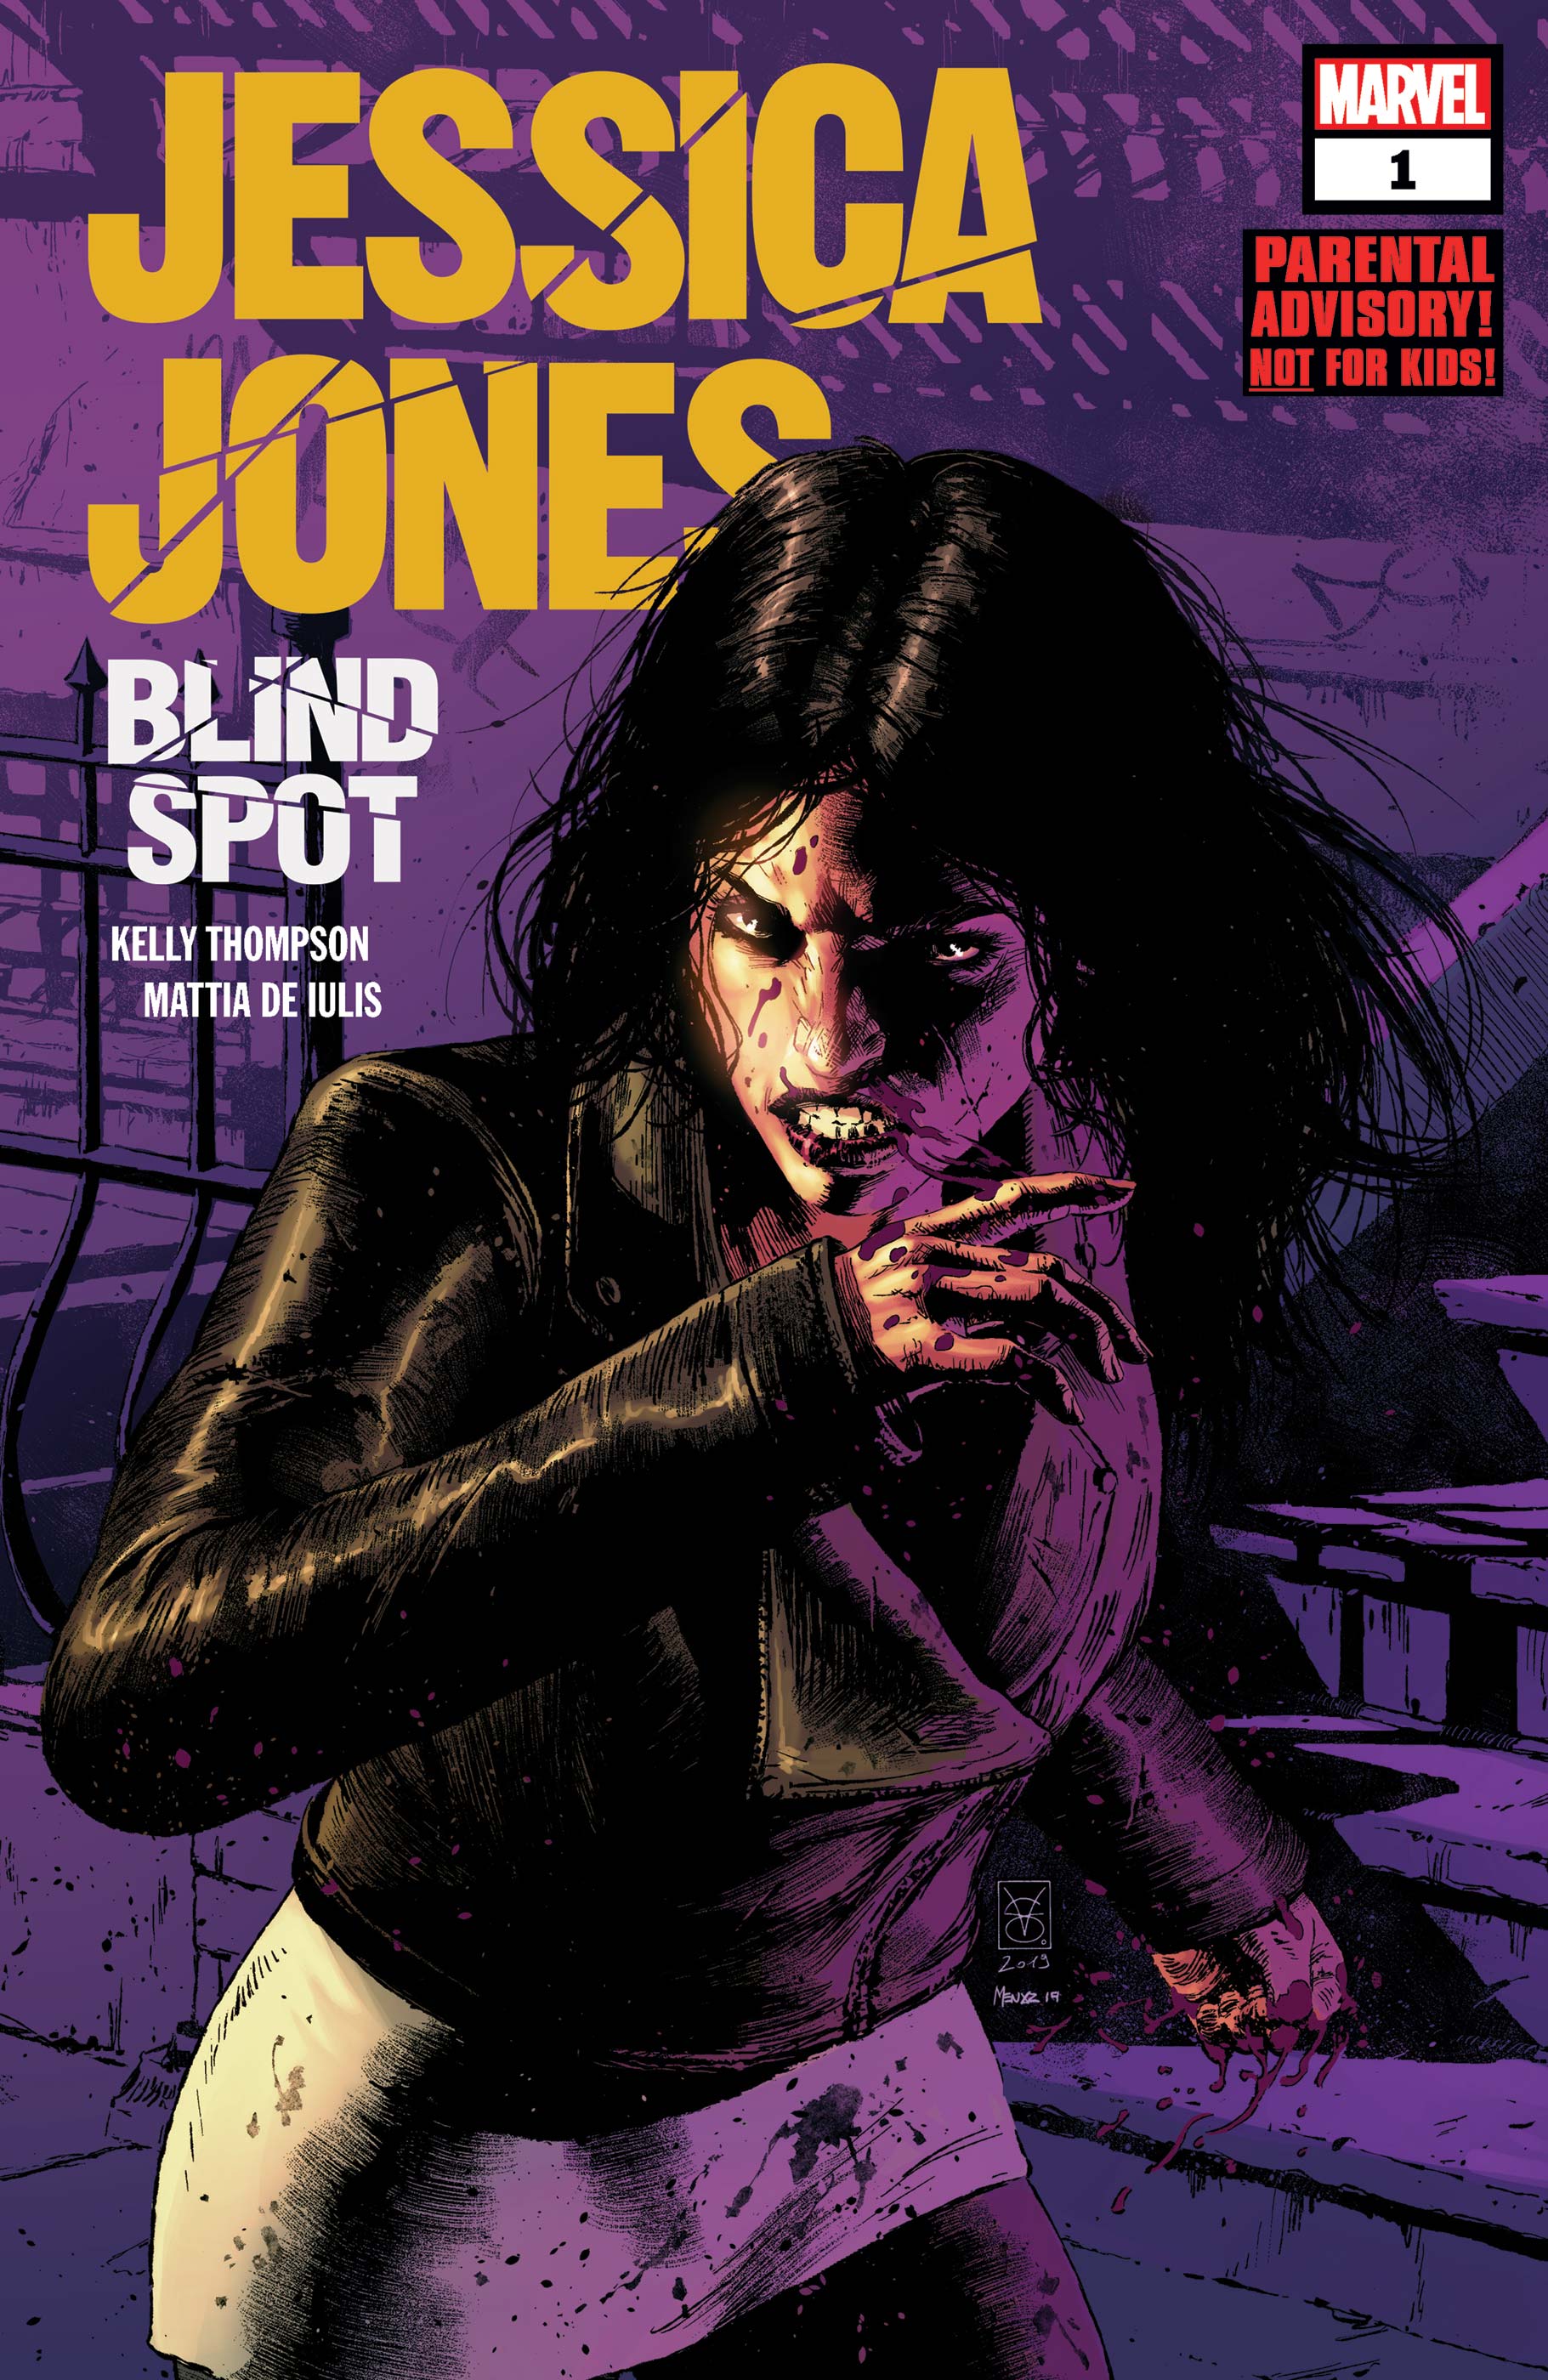 Marvel JESSICA JONES BLIND SPOT #2 CA-01 OF 6 